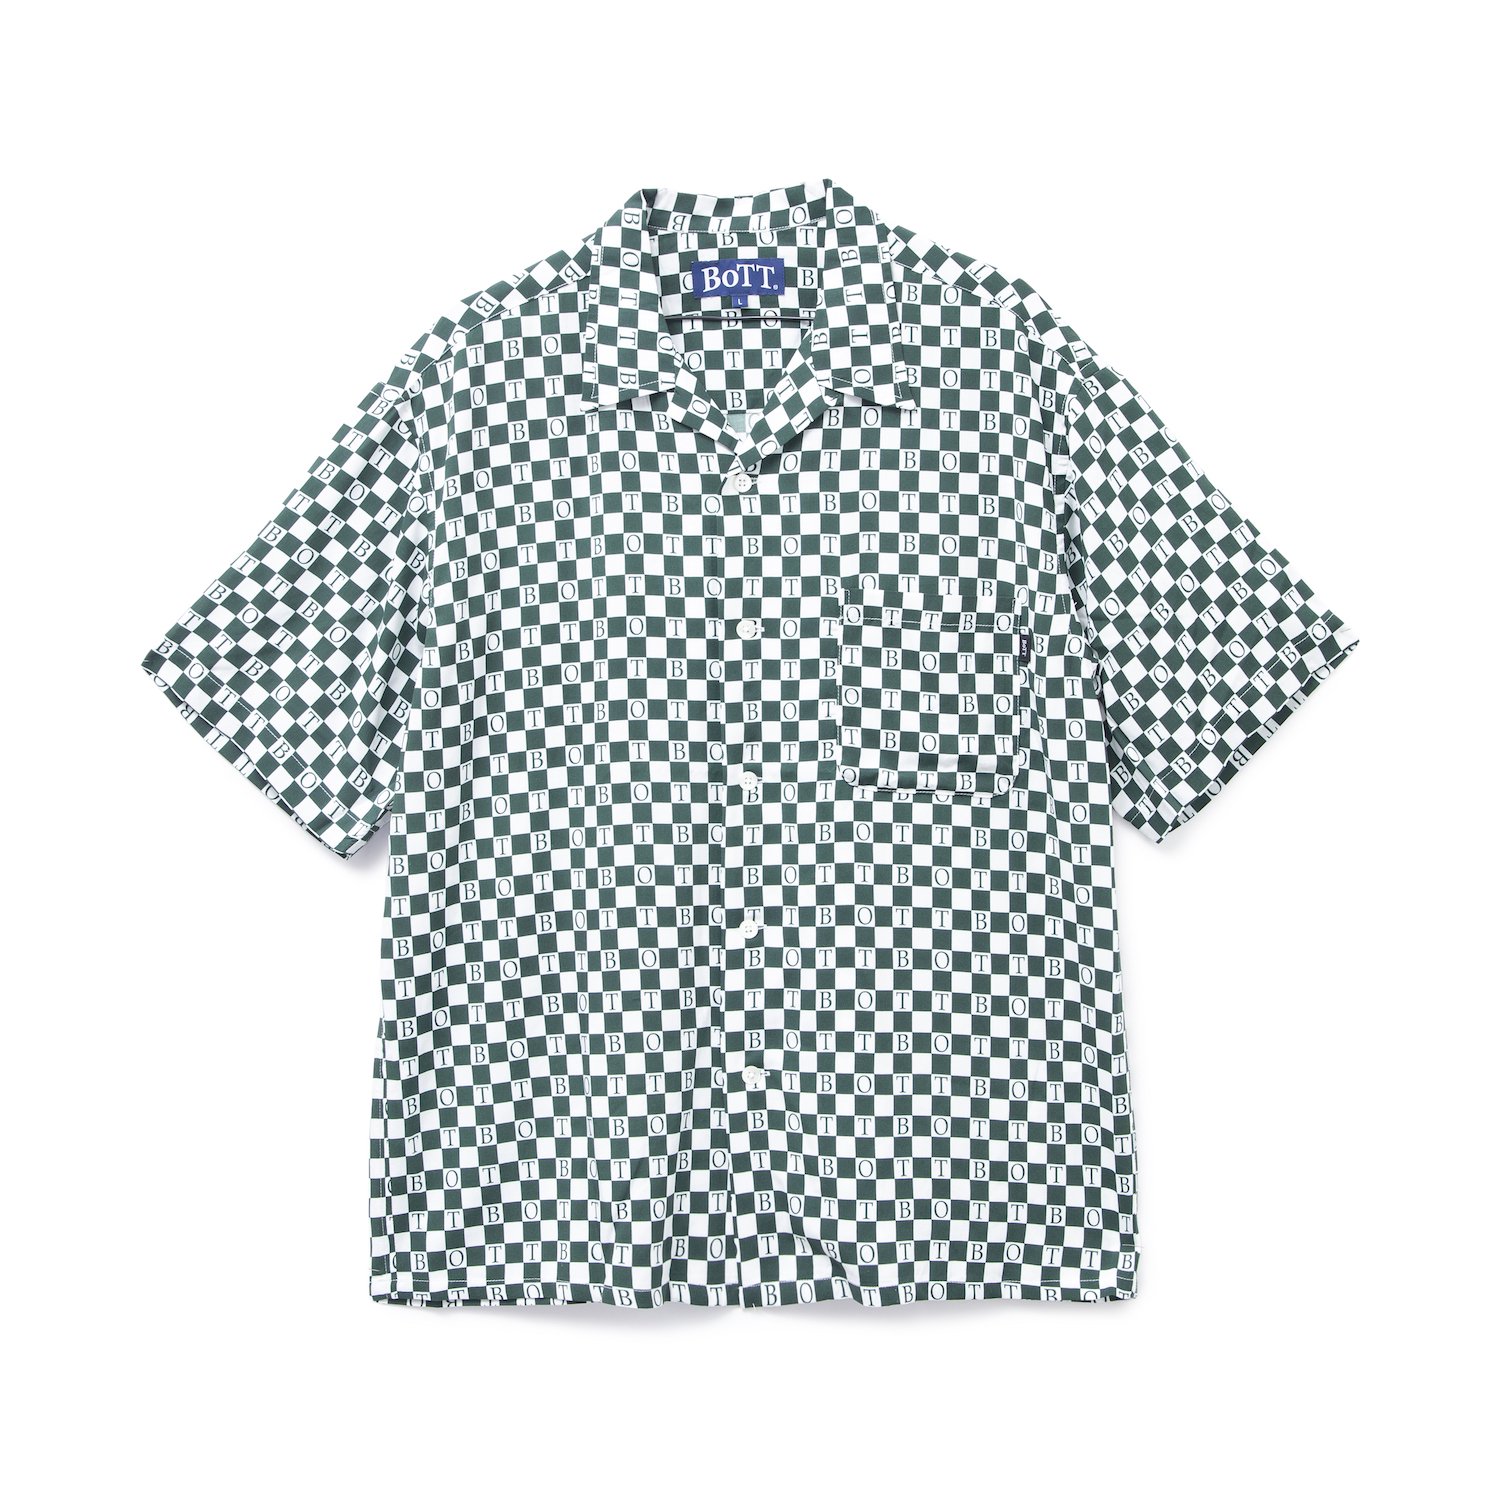 BoTT<br>Checkerboard S/SL Shirt<br>